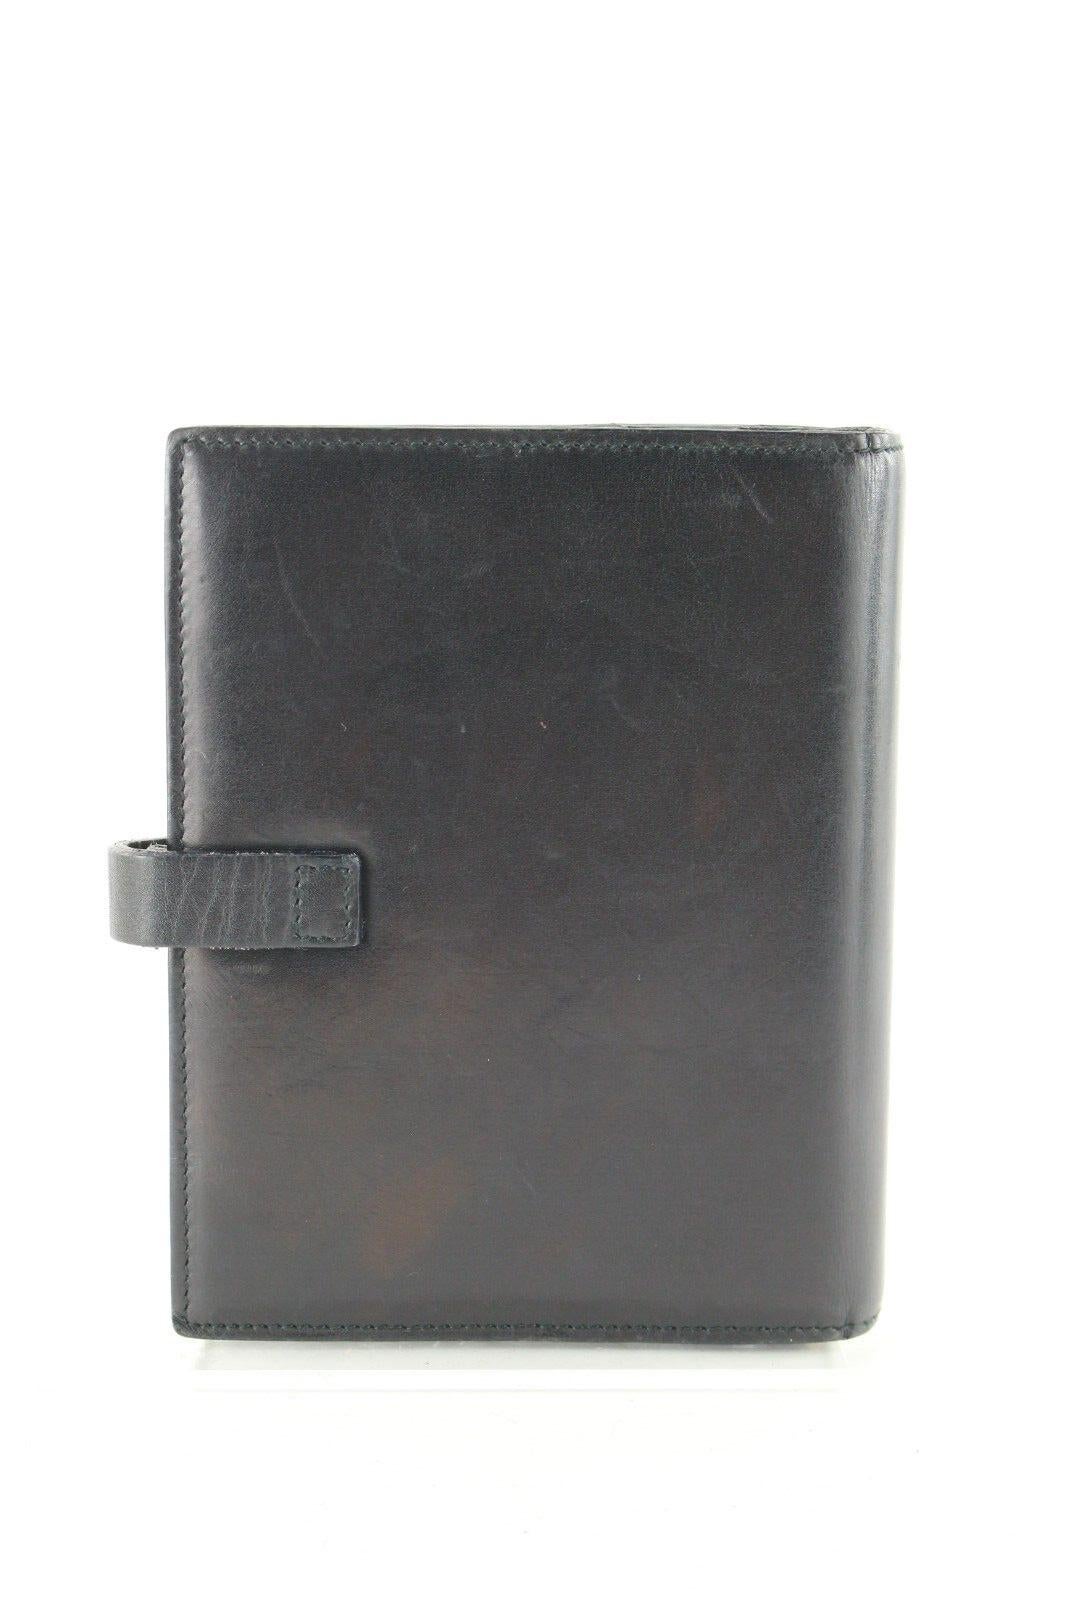 Gucci Agenda Schedule Note Book Cover Black Leather Notebook 3GG629K Unisexe en vente